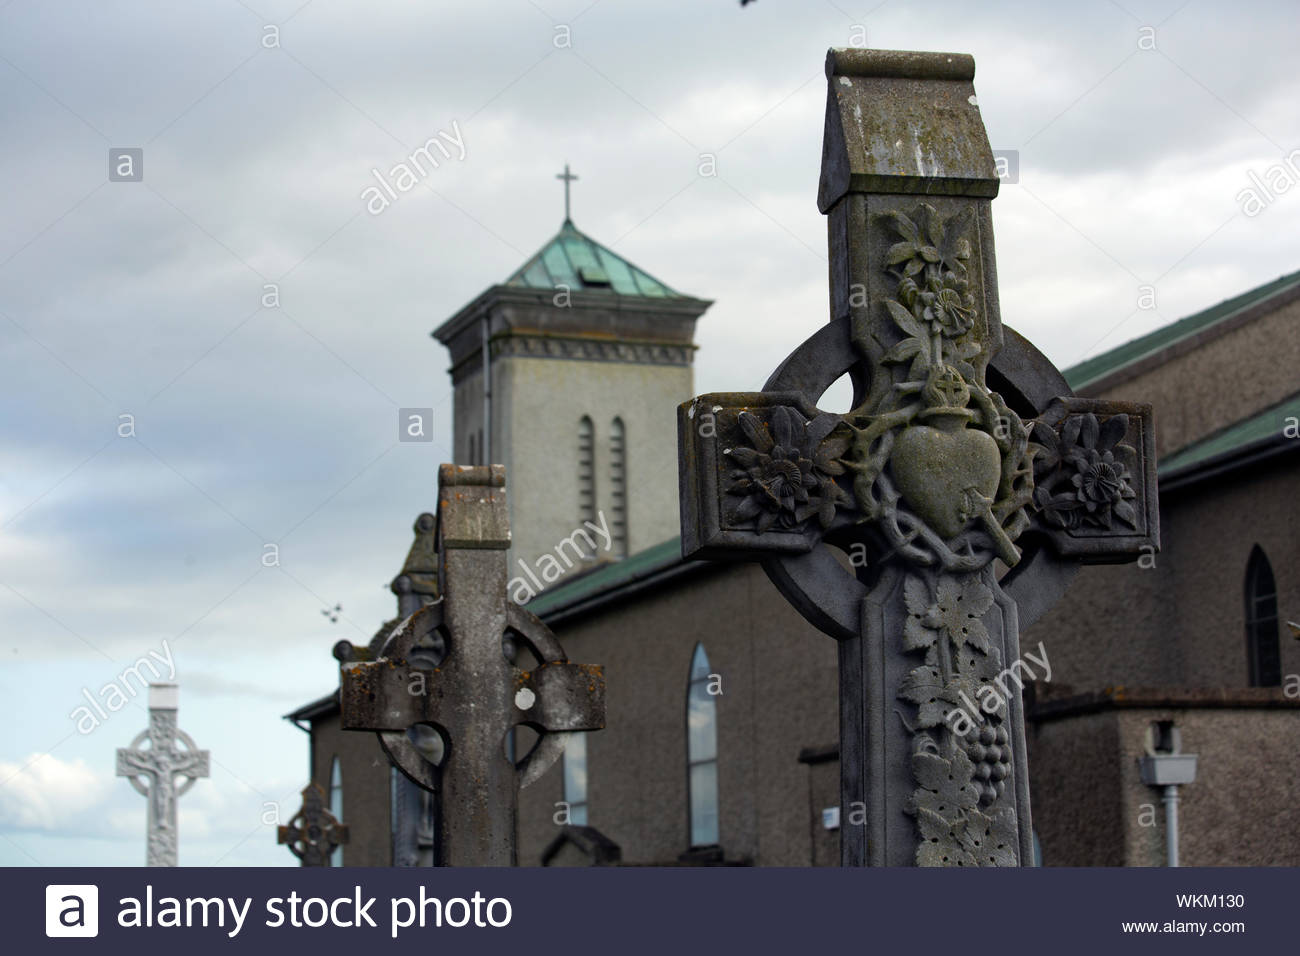 Stone celtic crosses in an Irish graveyard Stock Photo